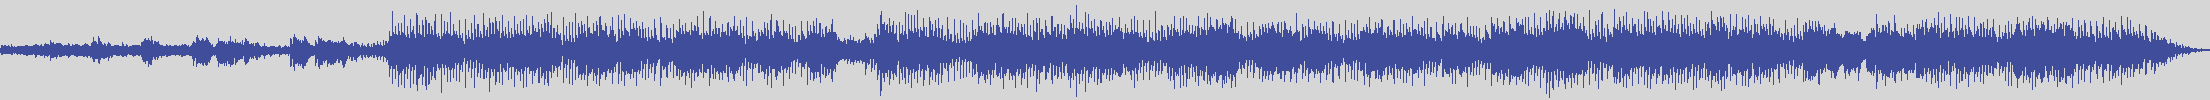 digiphonic_records [DPR008] Salvatore Adamo - Lontano [Original Mix] audio wave form